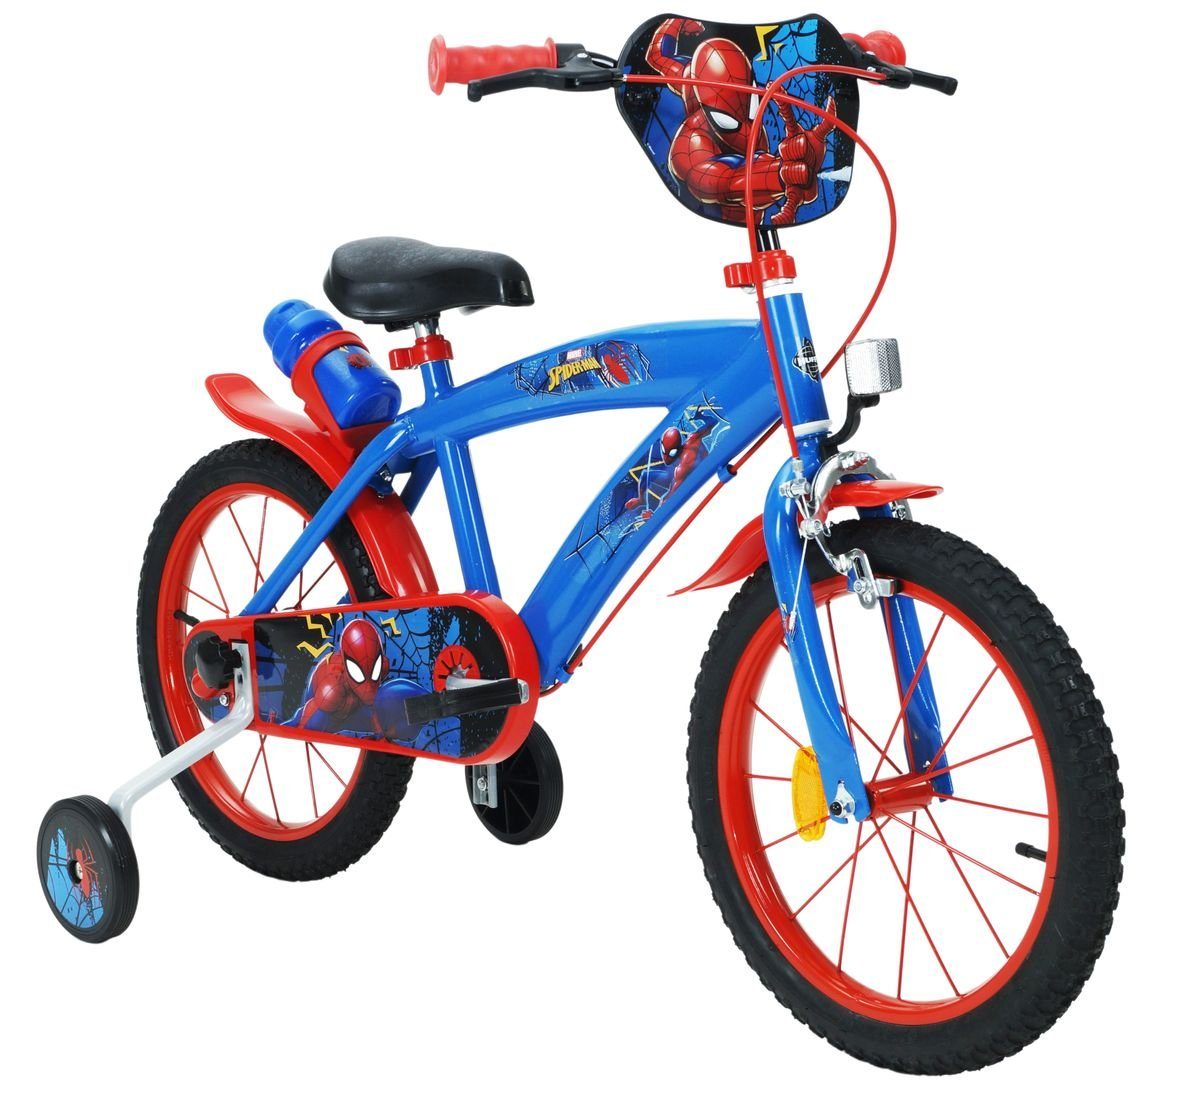 21901, Gang, Kinderfahrrad Stützräder, Trinkflasche Fahrrad 1 Fahrrad Bikes Spiderman Toimsa Rad Kinder Jungen Bike Zoll 16 Toimsa